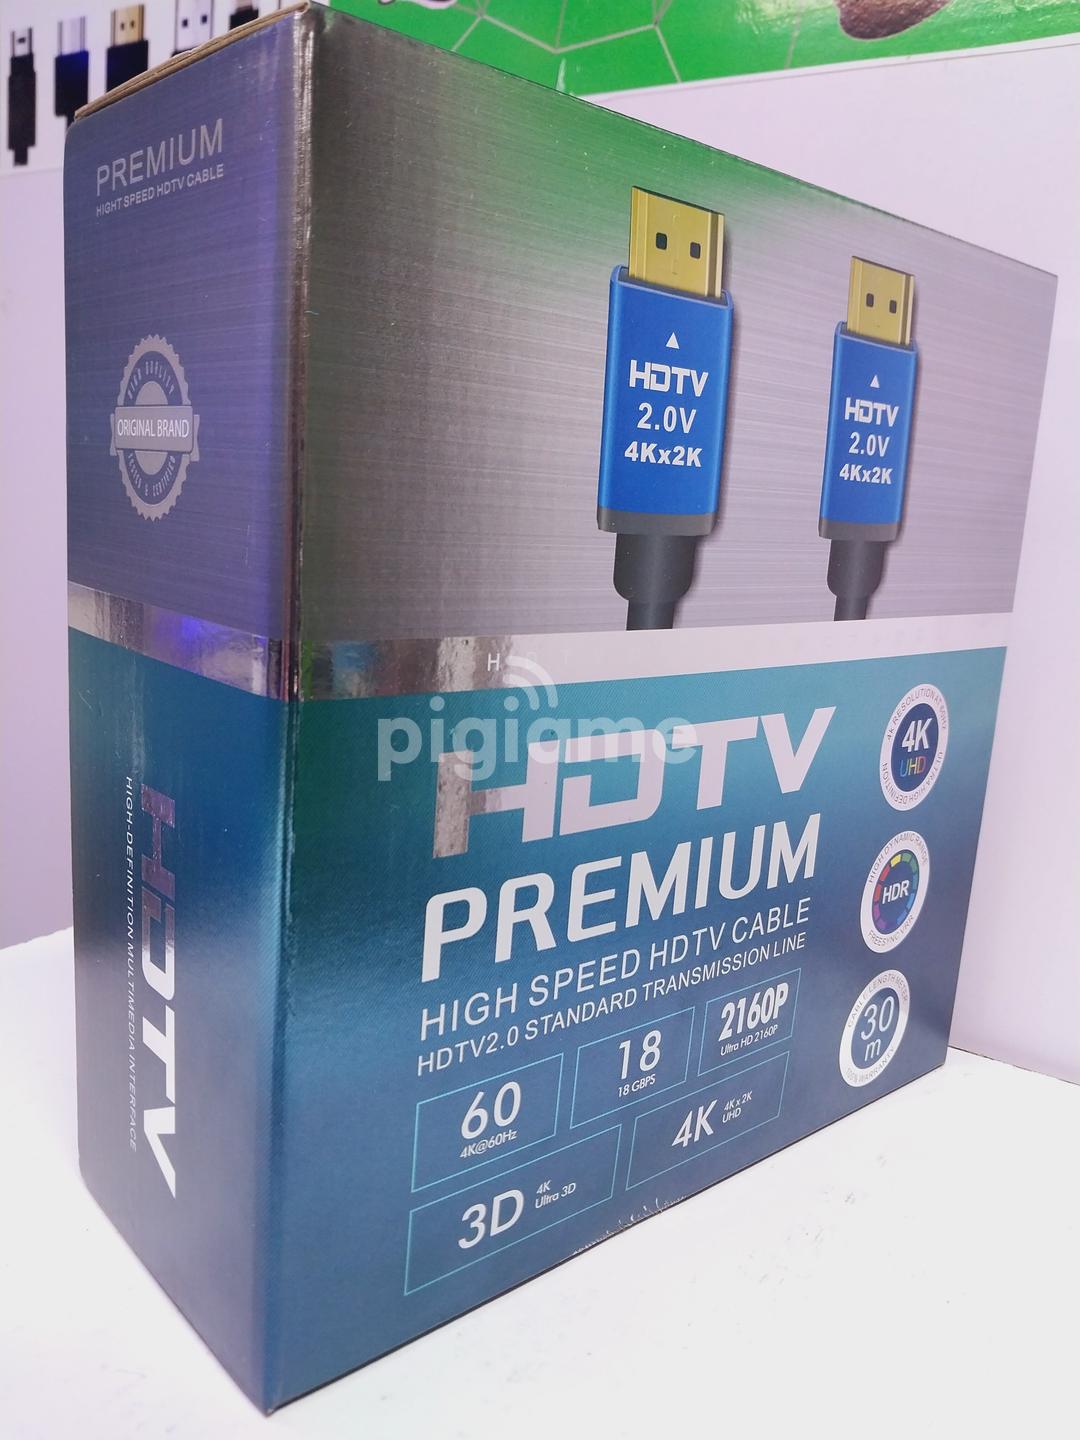 HDTV Premium 4K HDMI Cable (Hdtv Hdmi 4K UHD Premium High Speed Cable)